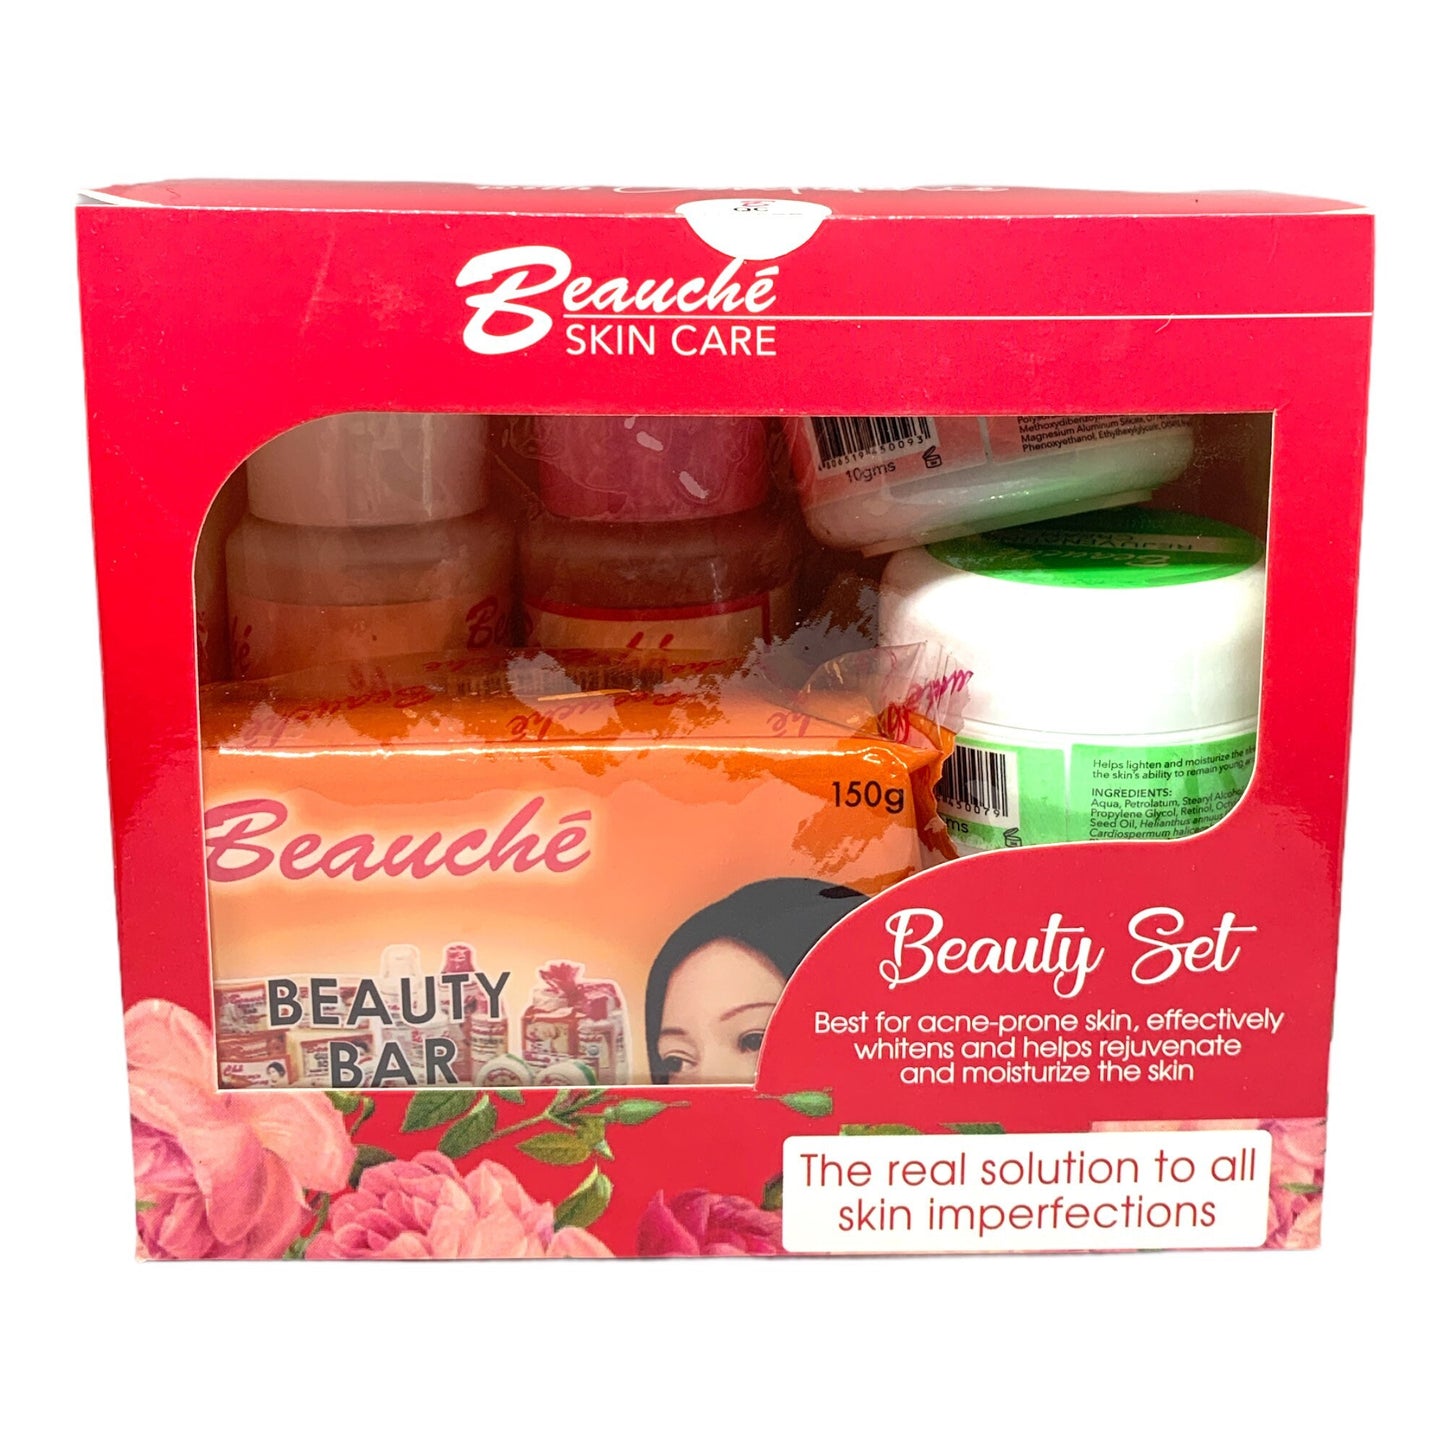 Beauche Beauty Set - New Bigger Soap Bar